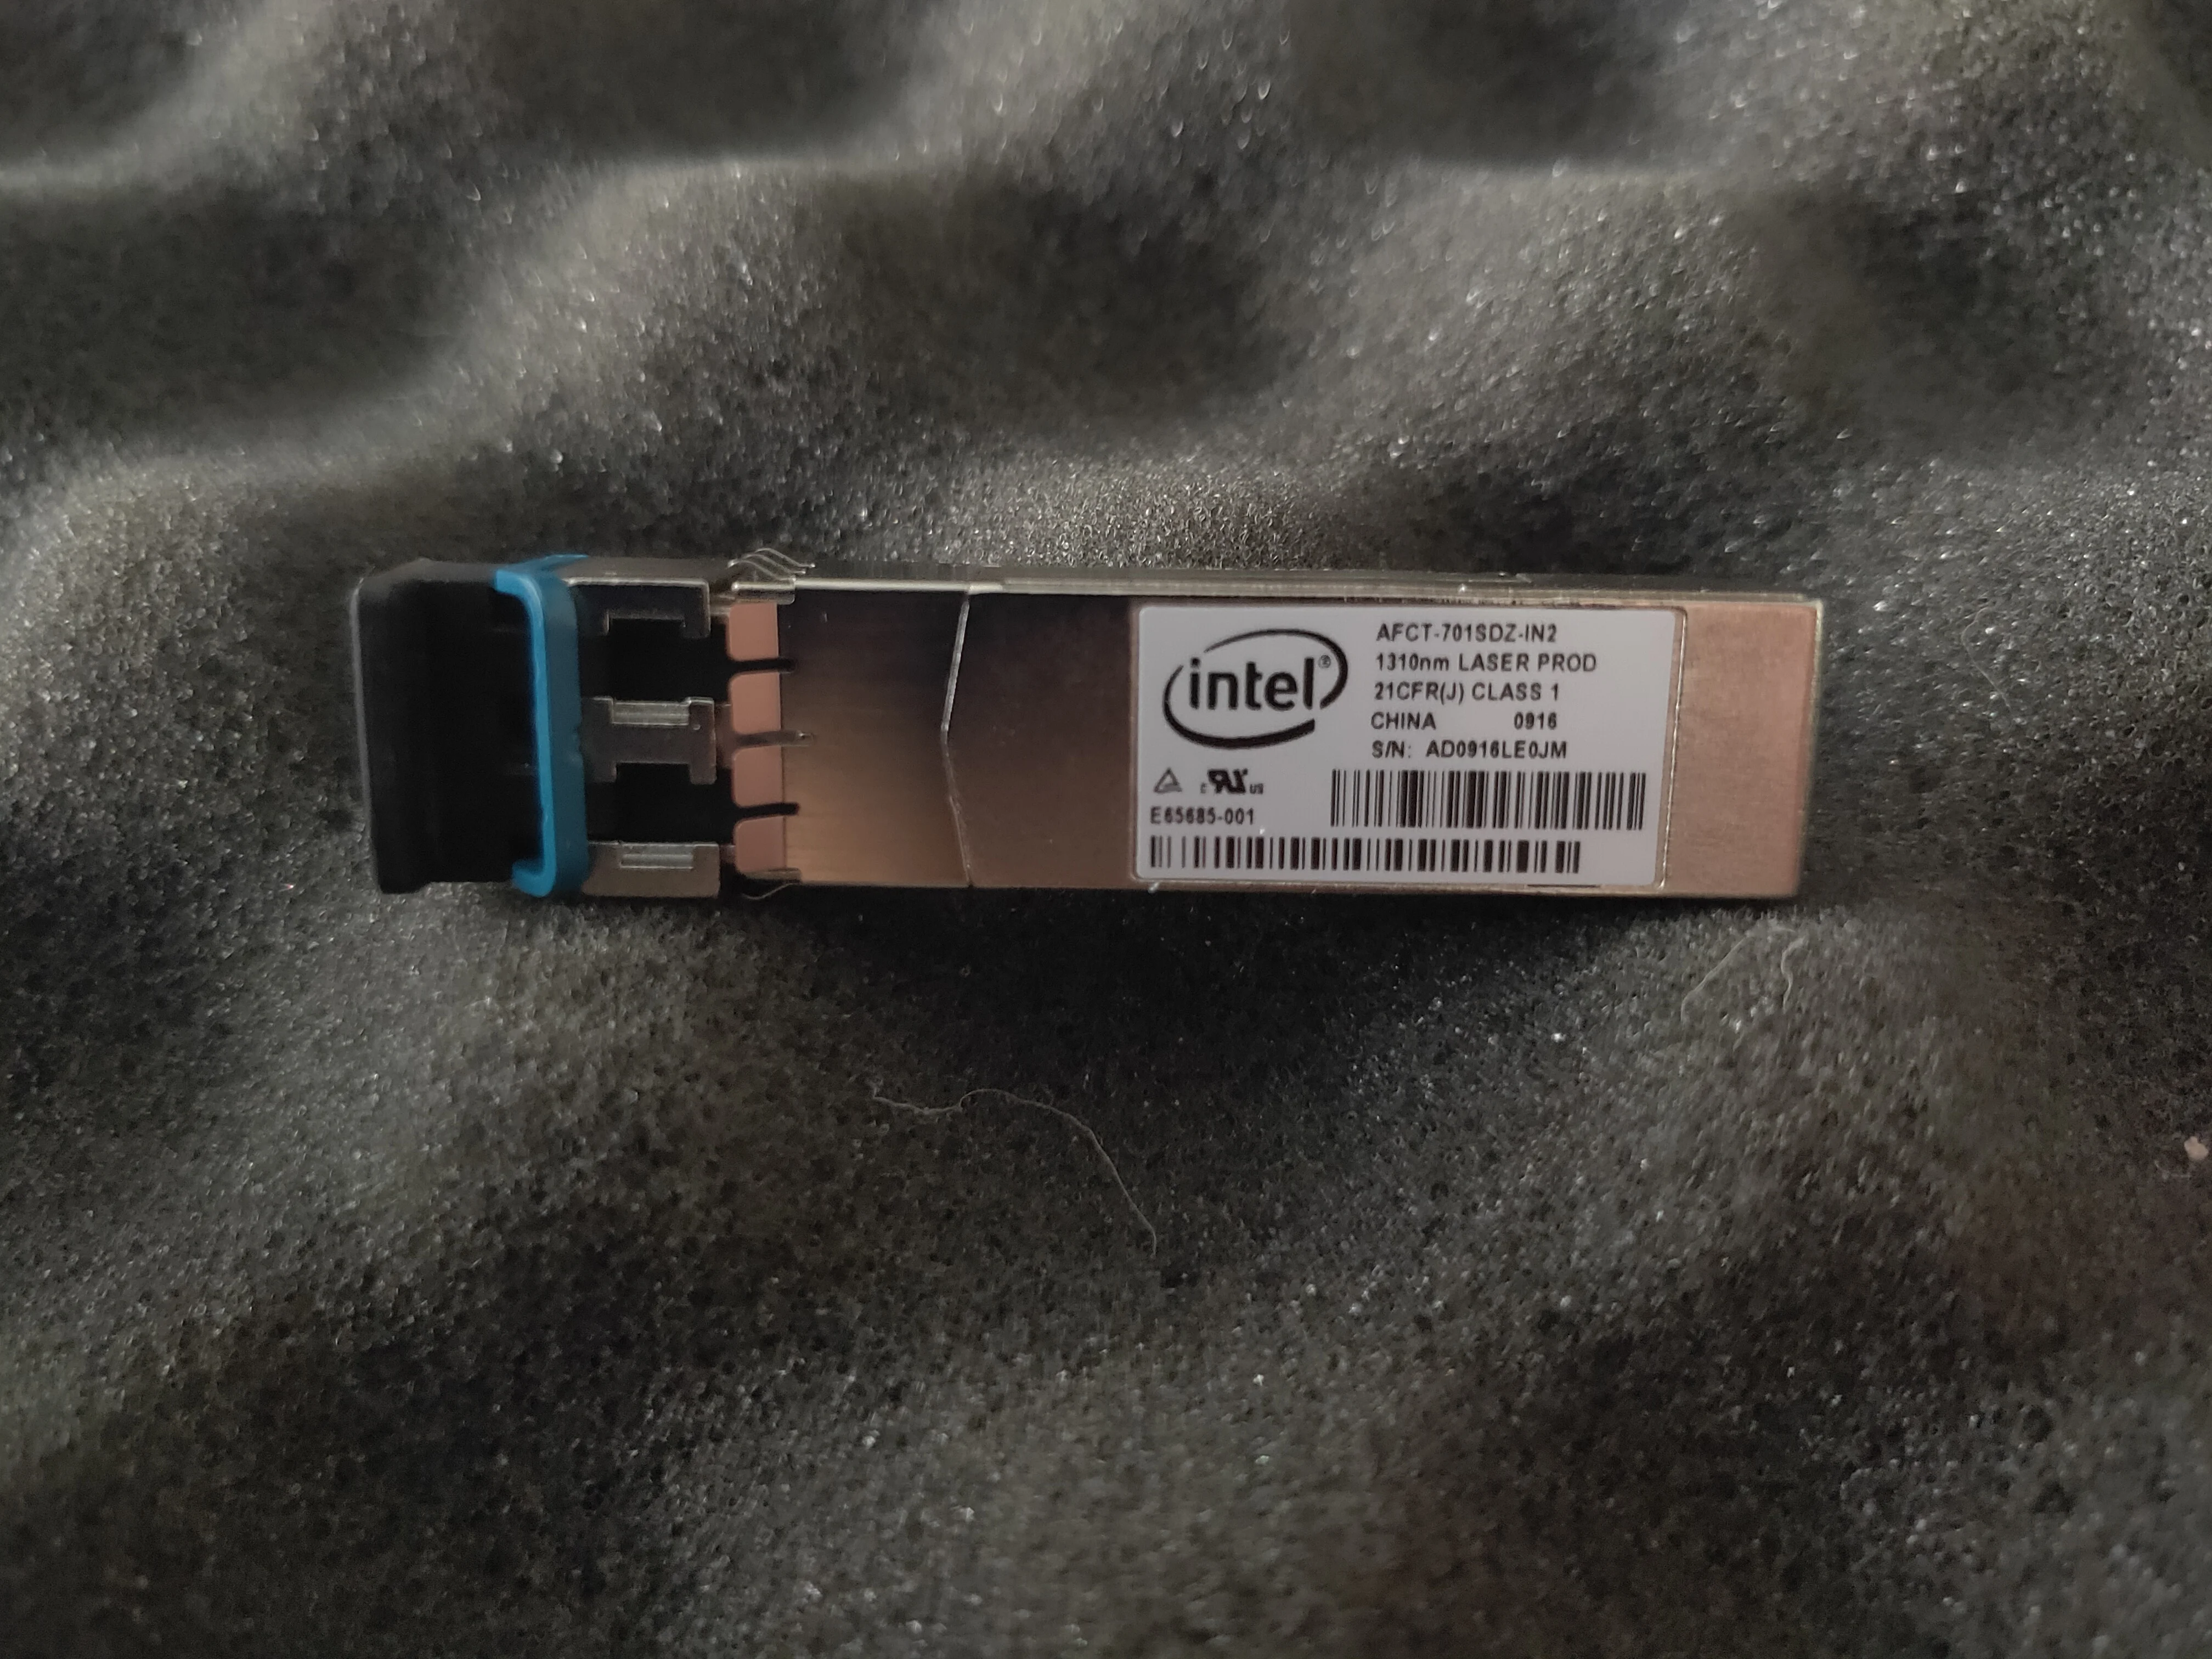 Intel AFCT-701SDZ-IN2/E65685-001 10G 10KM 1310 NM LR SFP+ Single-mode optical transceiver/intel 10g lr/intel 10g 10km